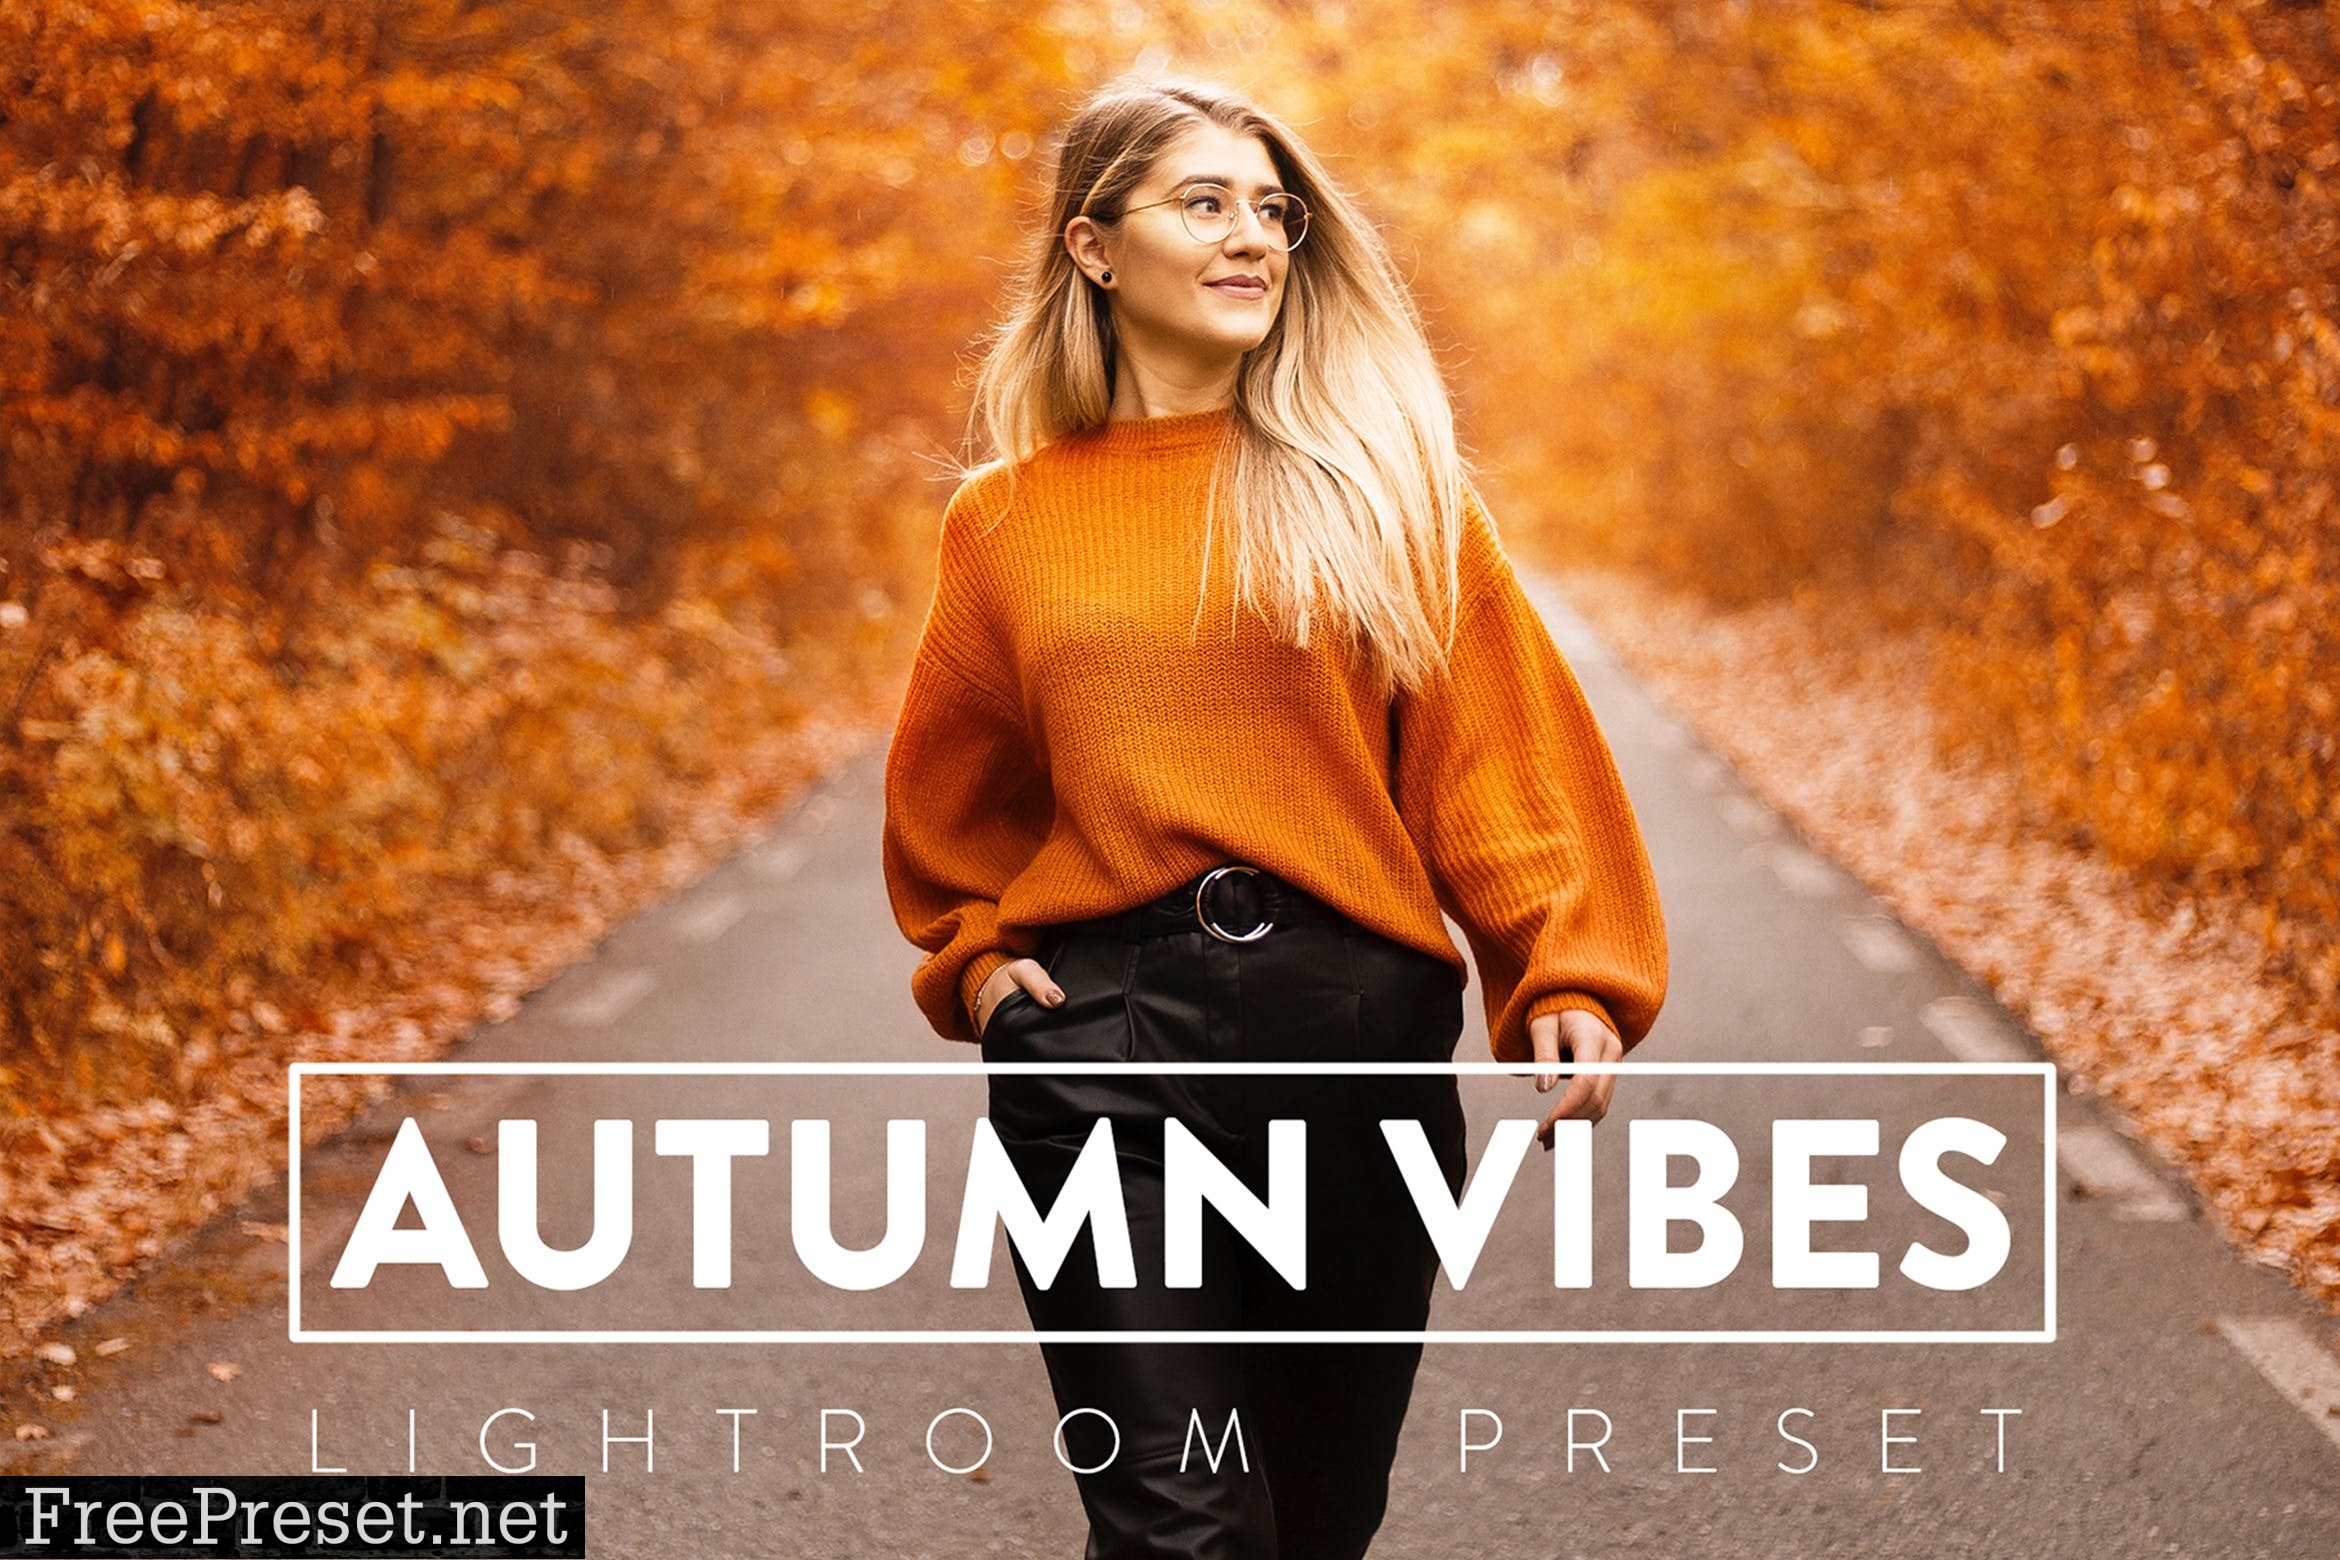 10 Autumn Vibes Lightroom Presets